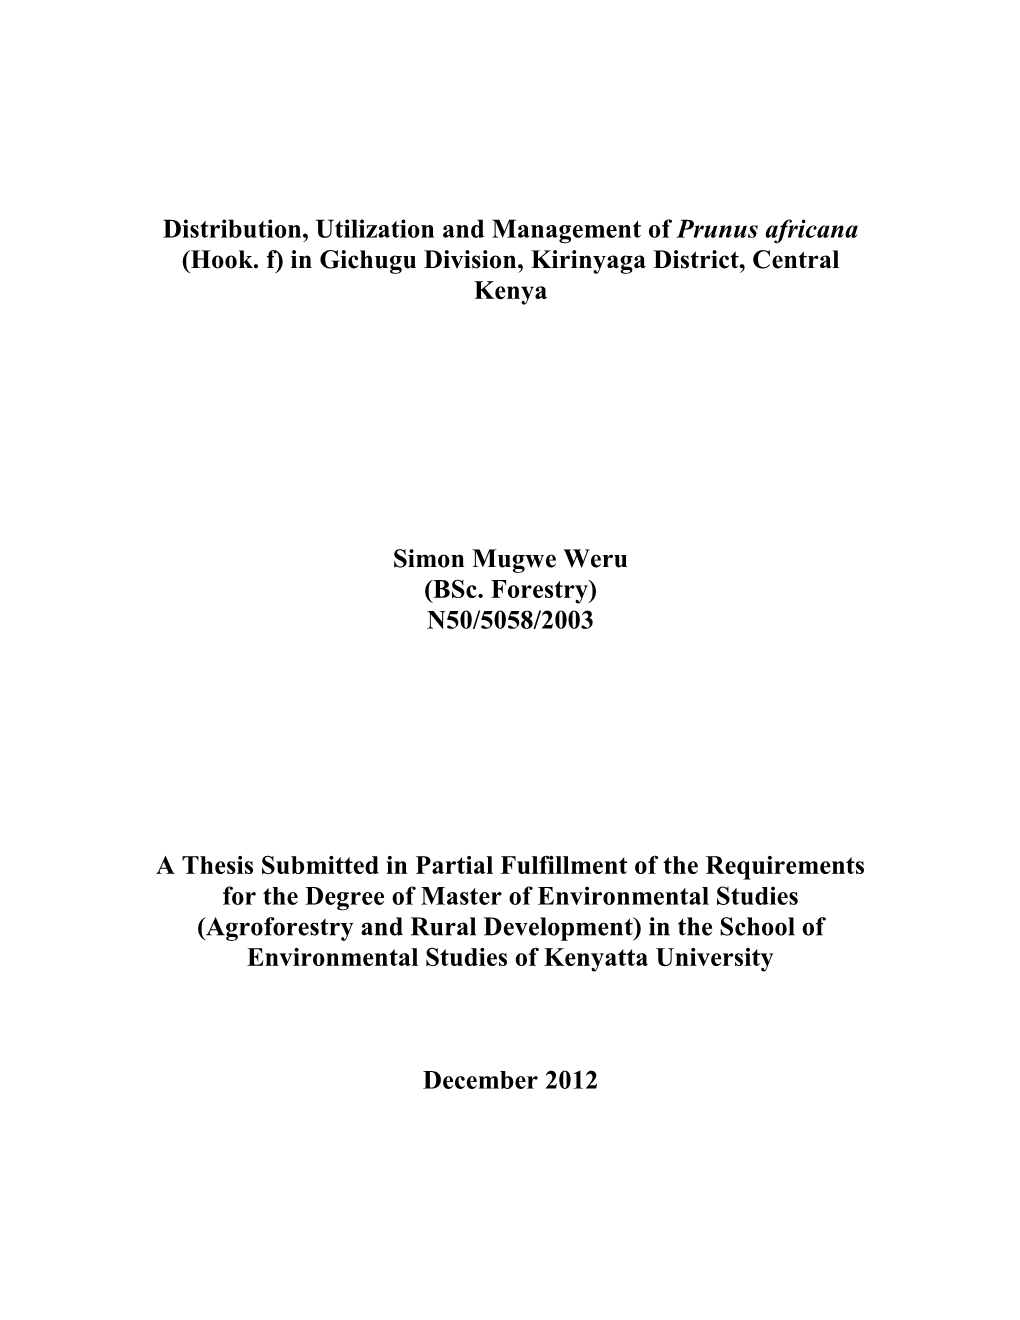 Distribution, Utilization and Management of Prunus Africana (Hook